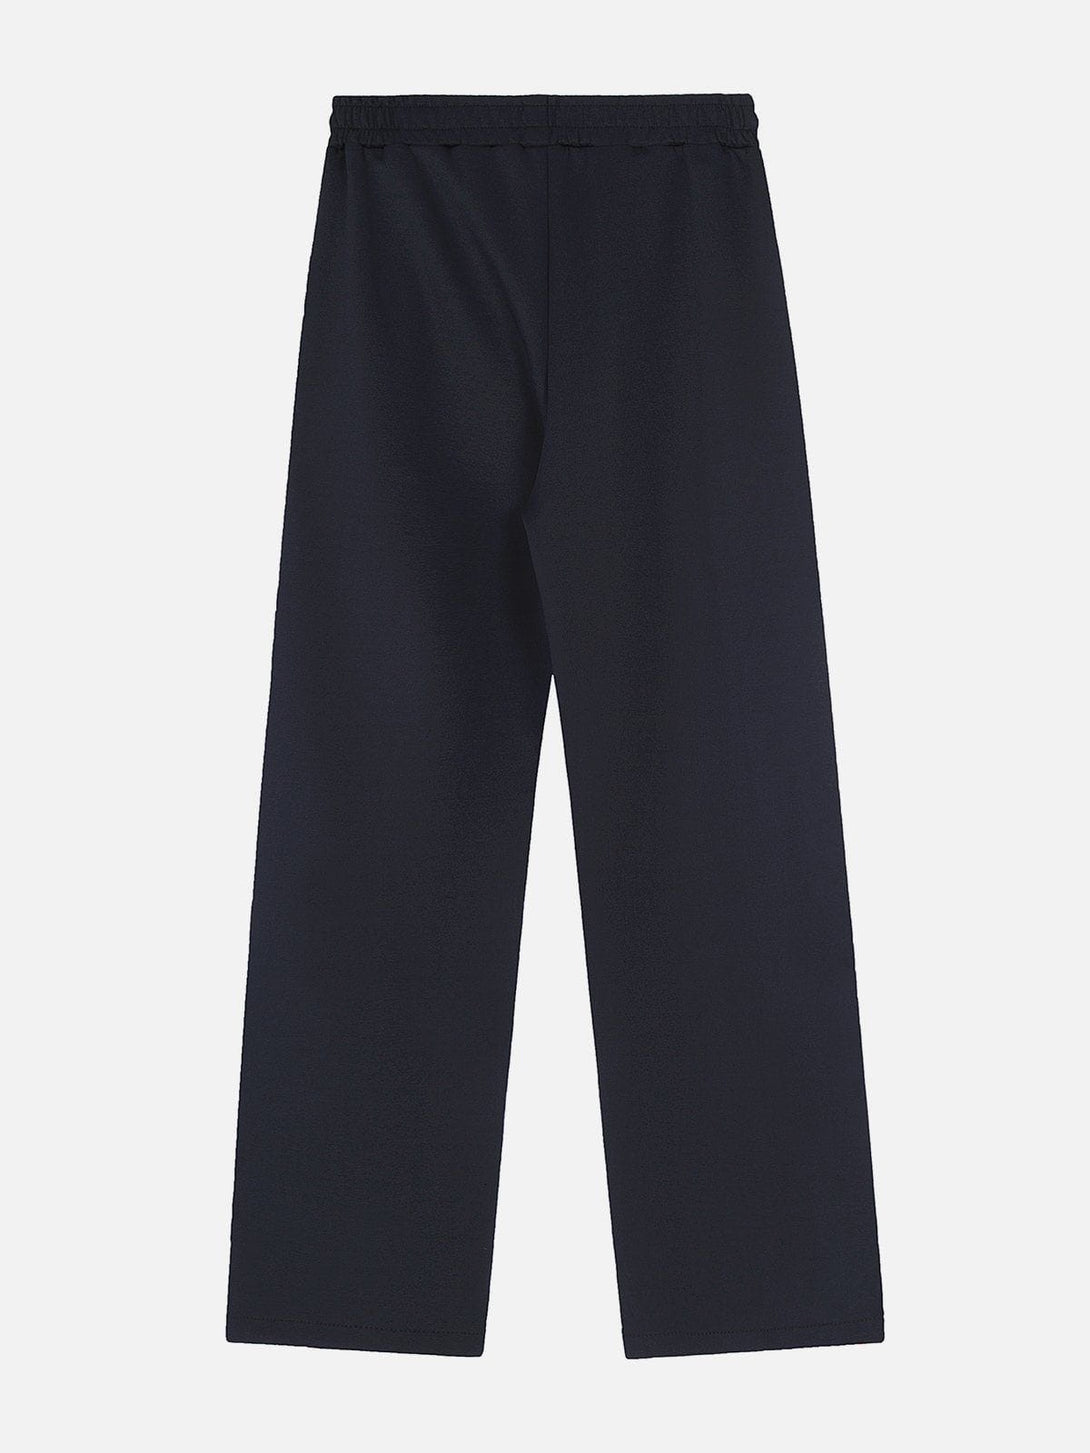 Levefly - Color Clash Zipper Drawstring Sweatpants - Streetwear Fashion - levefly.com